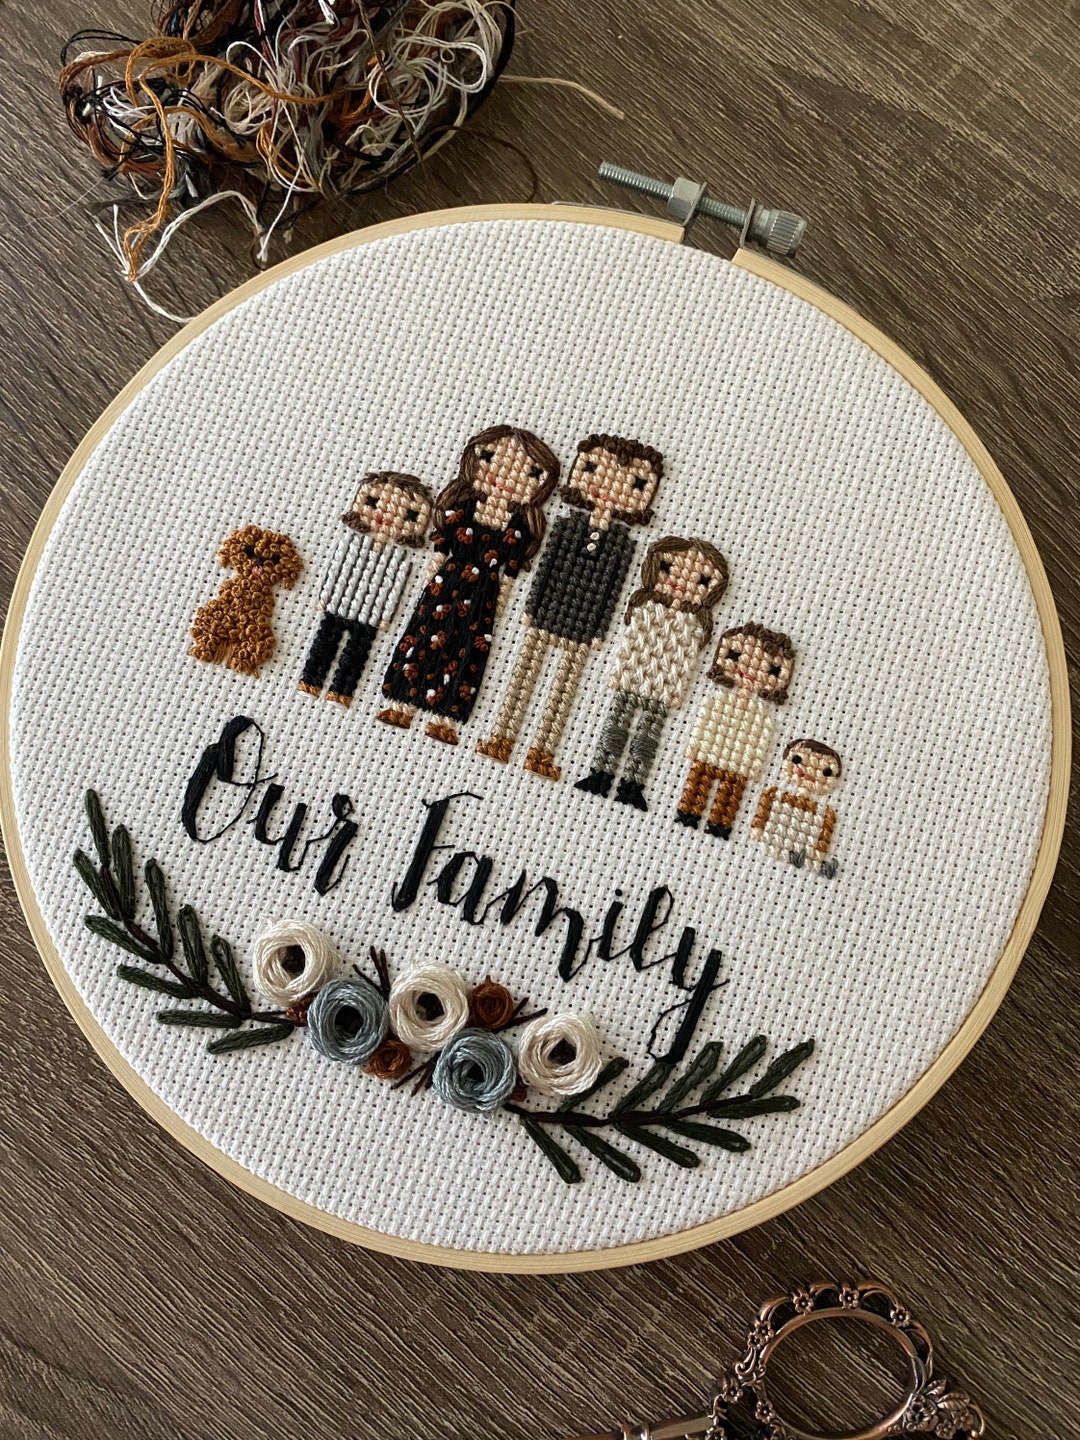 Custom Cross Stitch Family Ornament - Spouse-ly